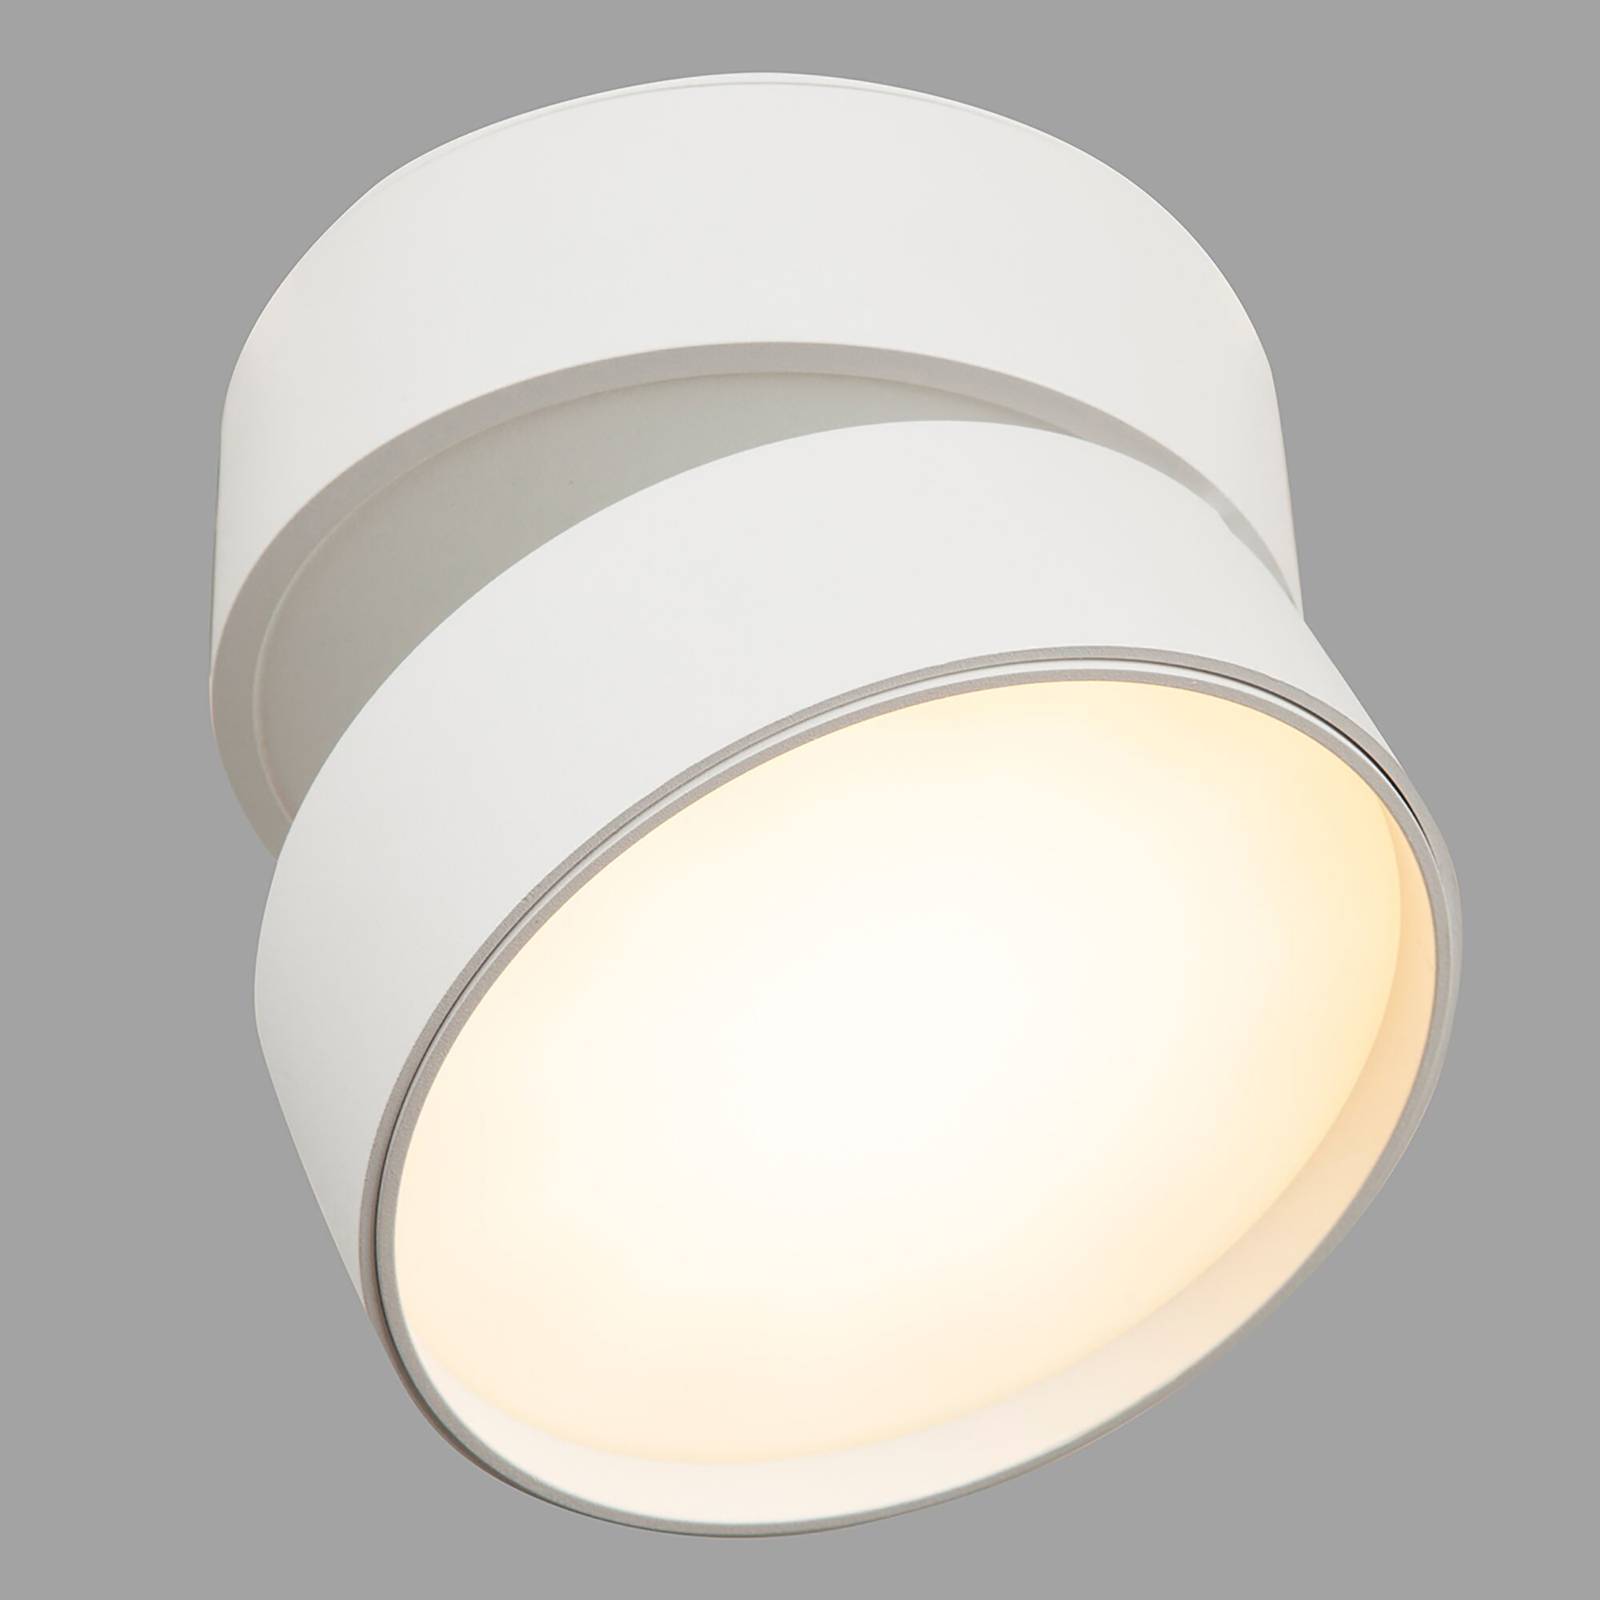 Photos - Chandelier / Lamp Maytoni Onda LED ceiling light 3,000 K 19 W white 